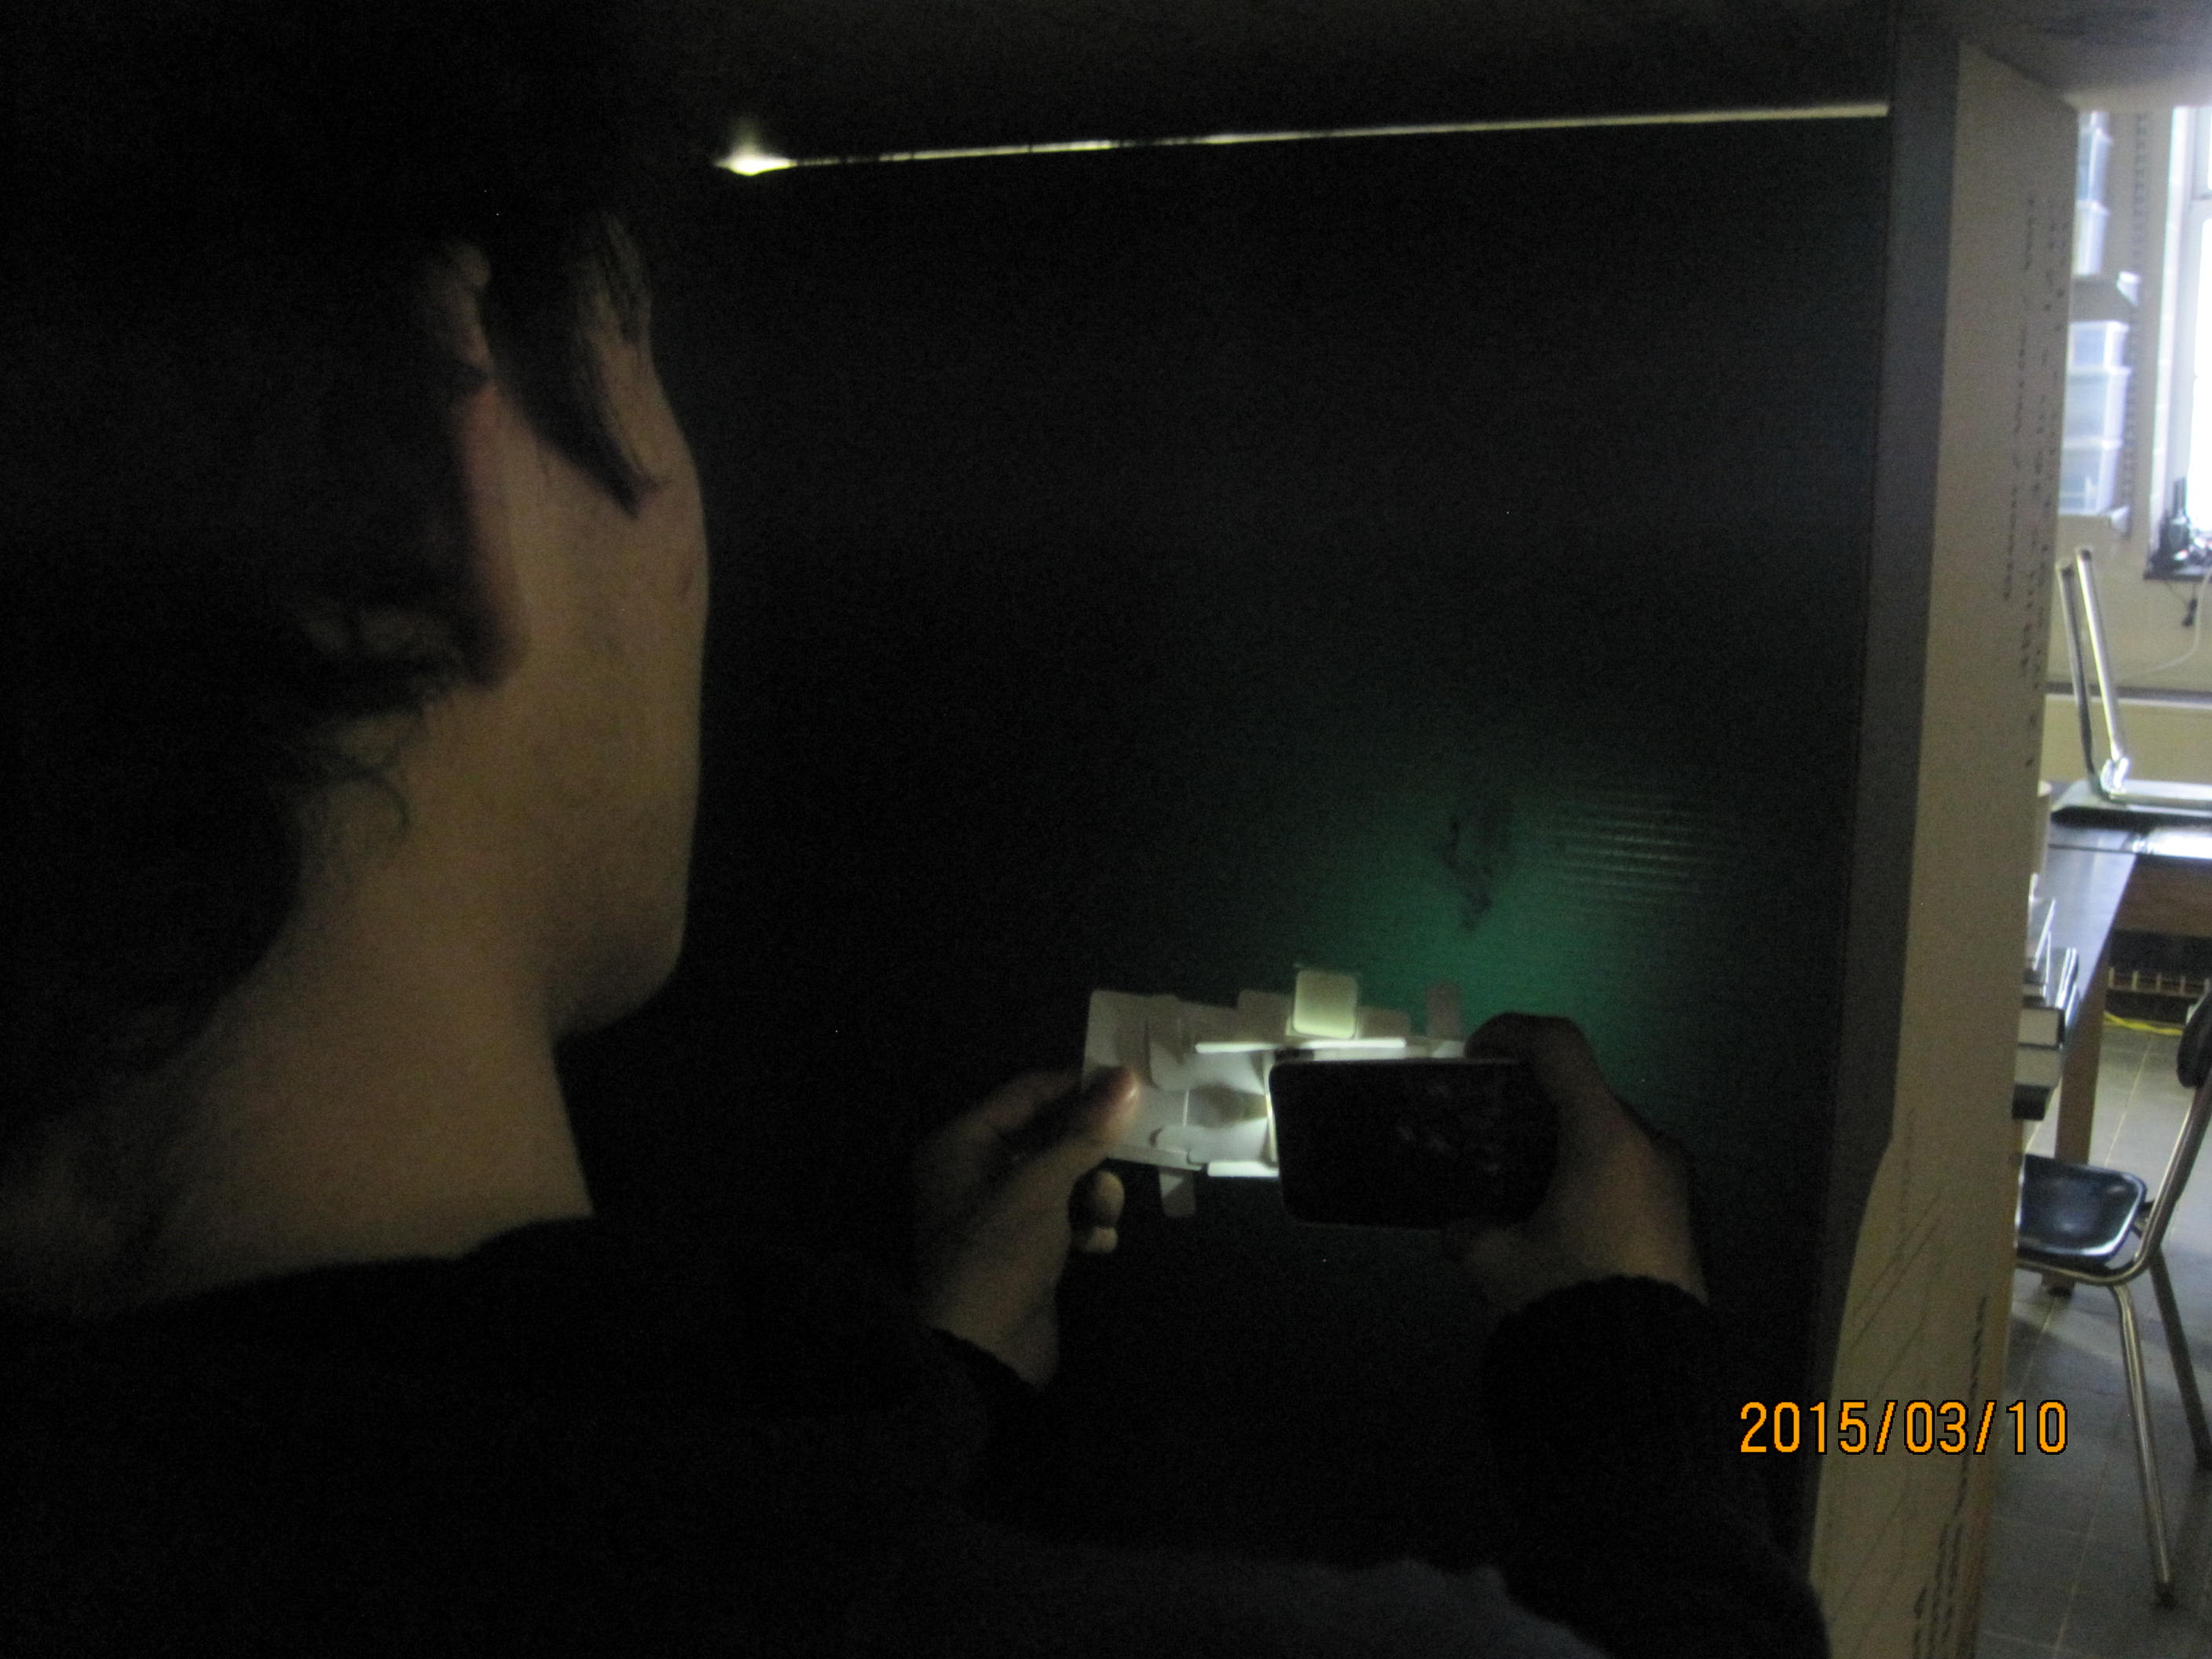 Jose Projecting an Amoeba on to a dark wall.